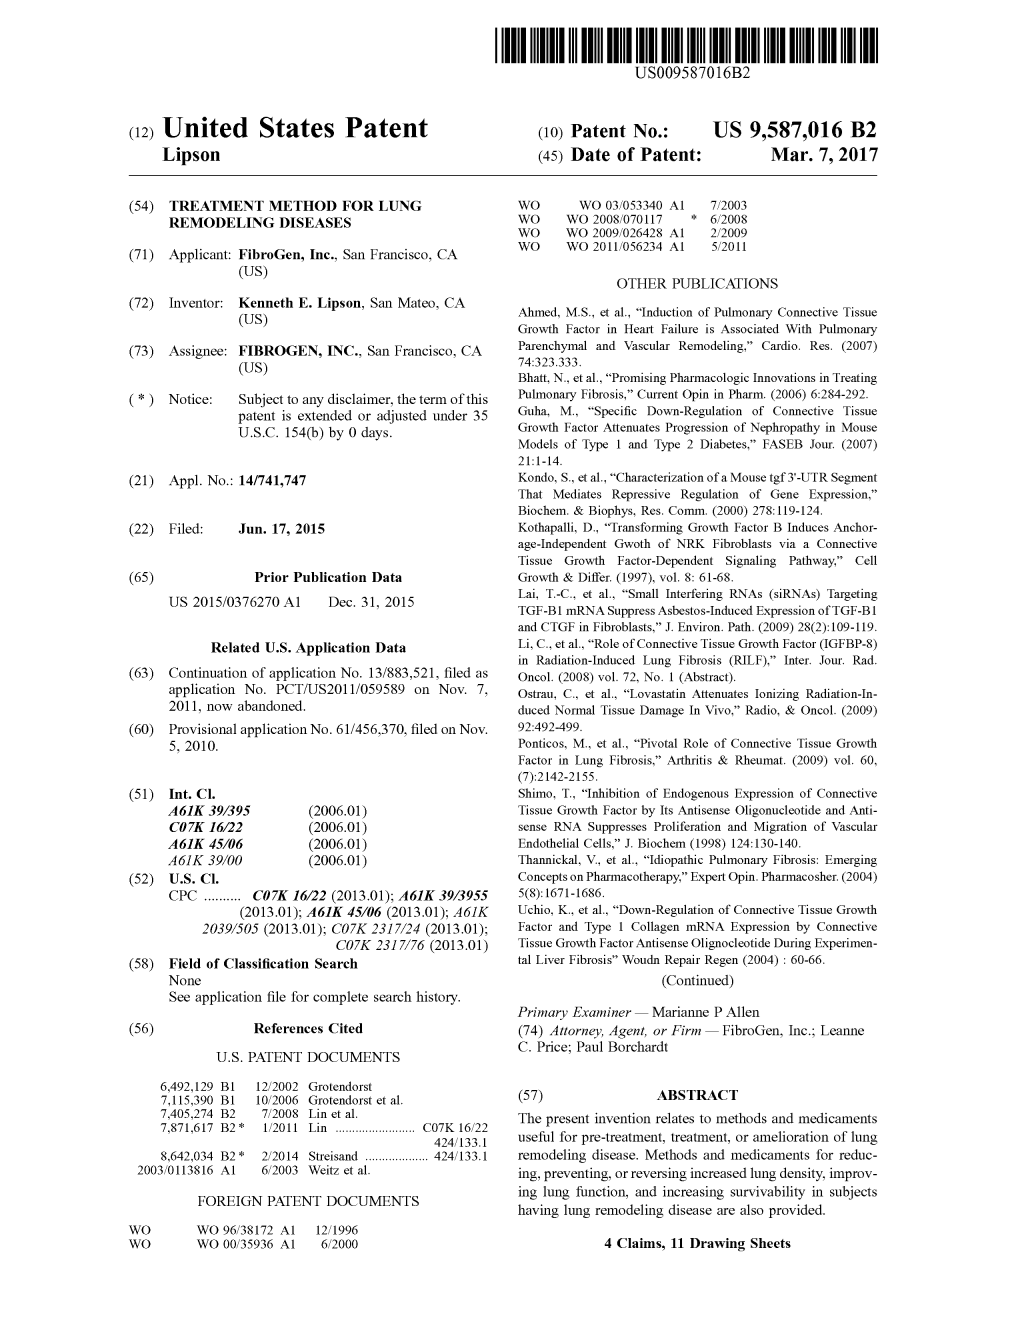 United States Patent (10) Patent No.: US 9,587,016 B2 Lipson (45) Date of Patent: Mar